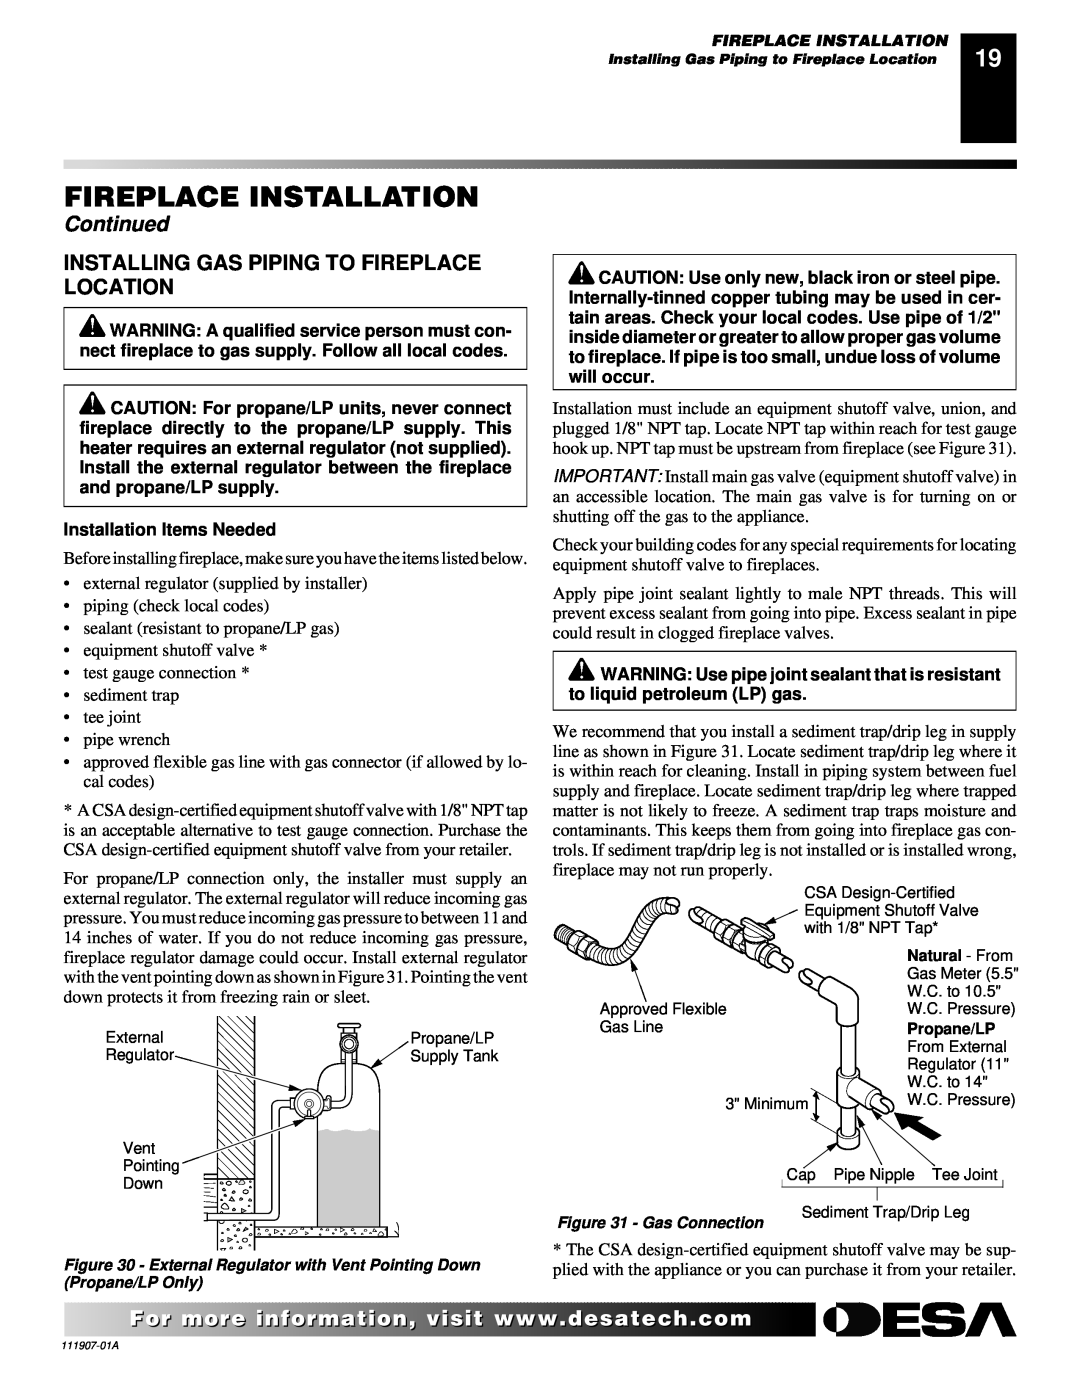 Desa (V)V42EPA(1), (V)V42ENA(1) Installing Gas Piping To Fireplace Location, Fireplace Installation, Continued 